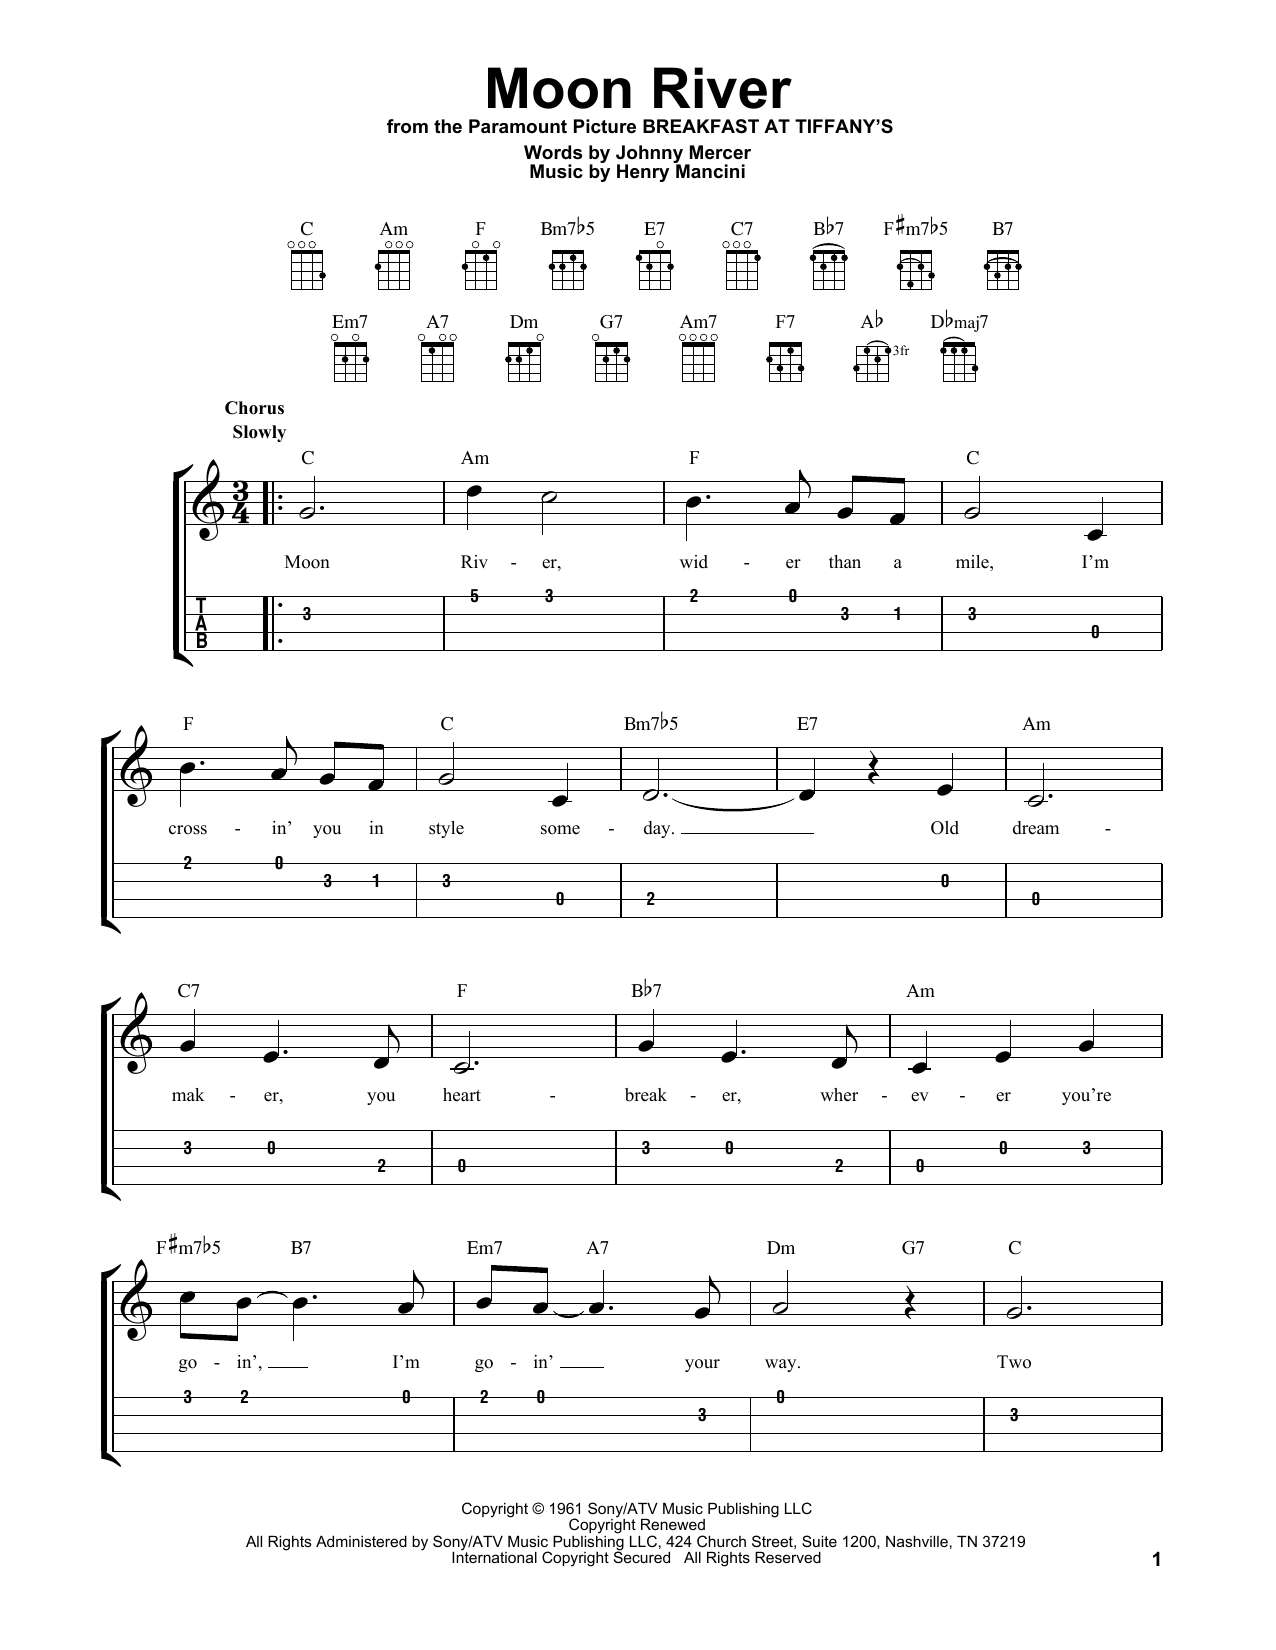 Johnny Mercer & Henry Mancini Moon River Sheet Music Notes & Chords for Ukulele - Download or Print PDF